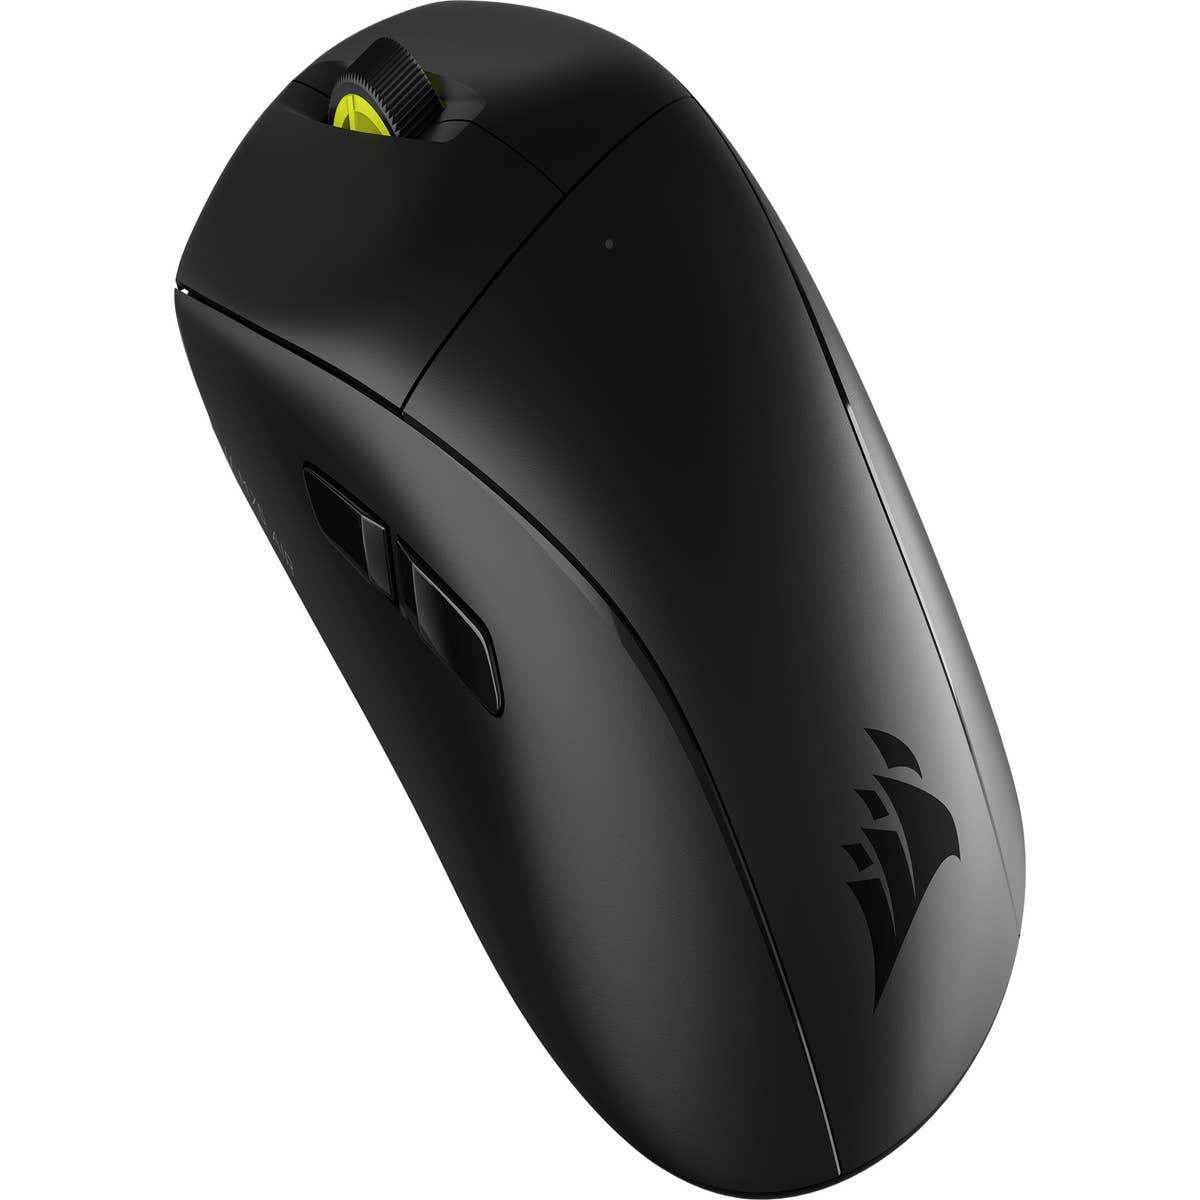 Razer Viper V2 Pro Ultra-lightweight Ultra-fast Wireless Esports Gaming  Mouse Switches Gen-3 - 30k Dpi Optical Sensor - Mouse - AliExpress